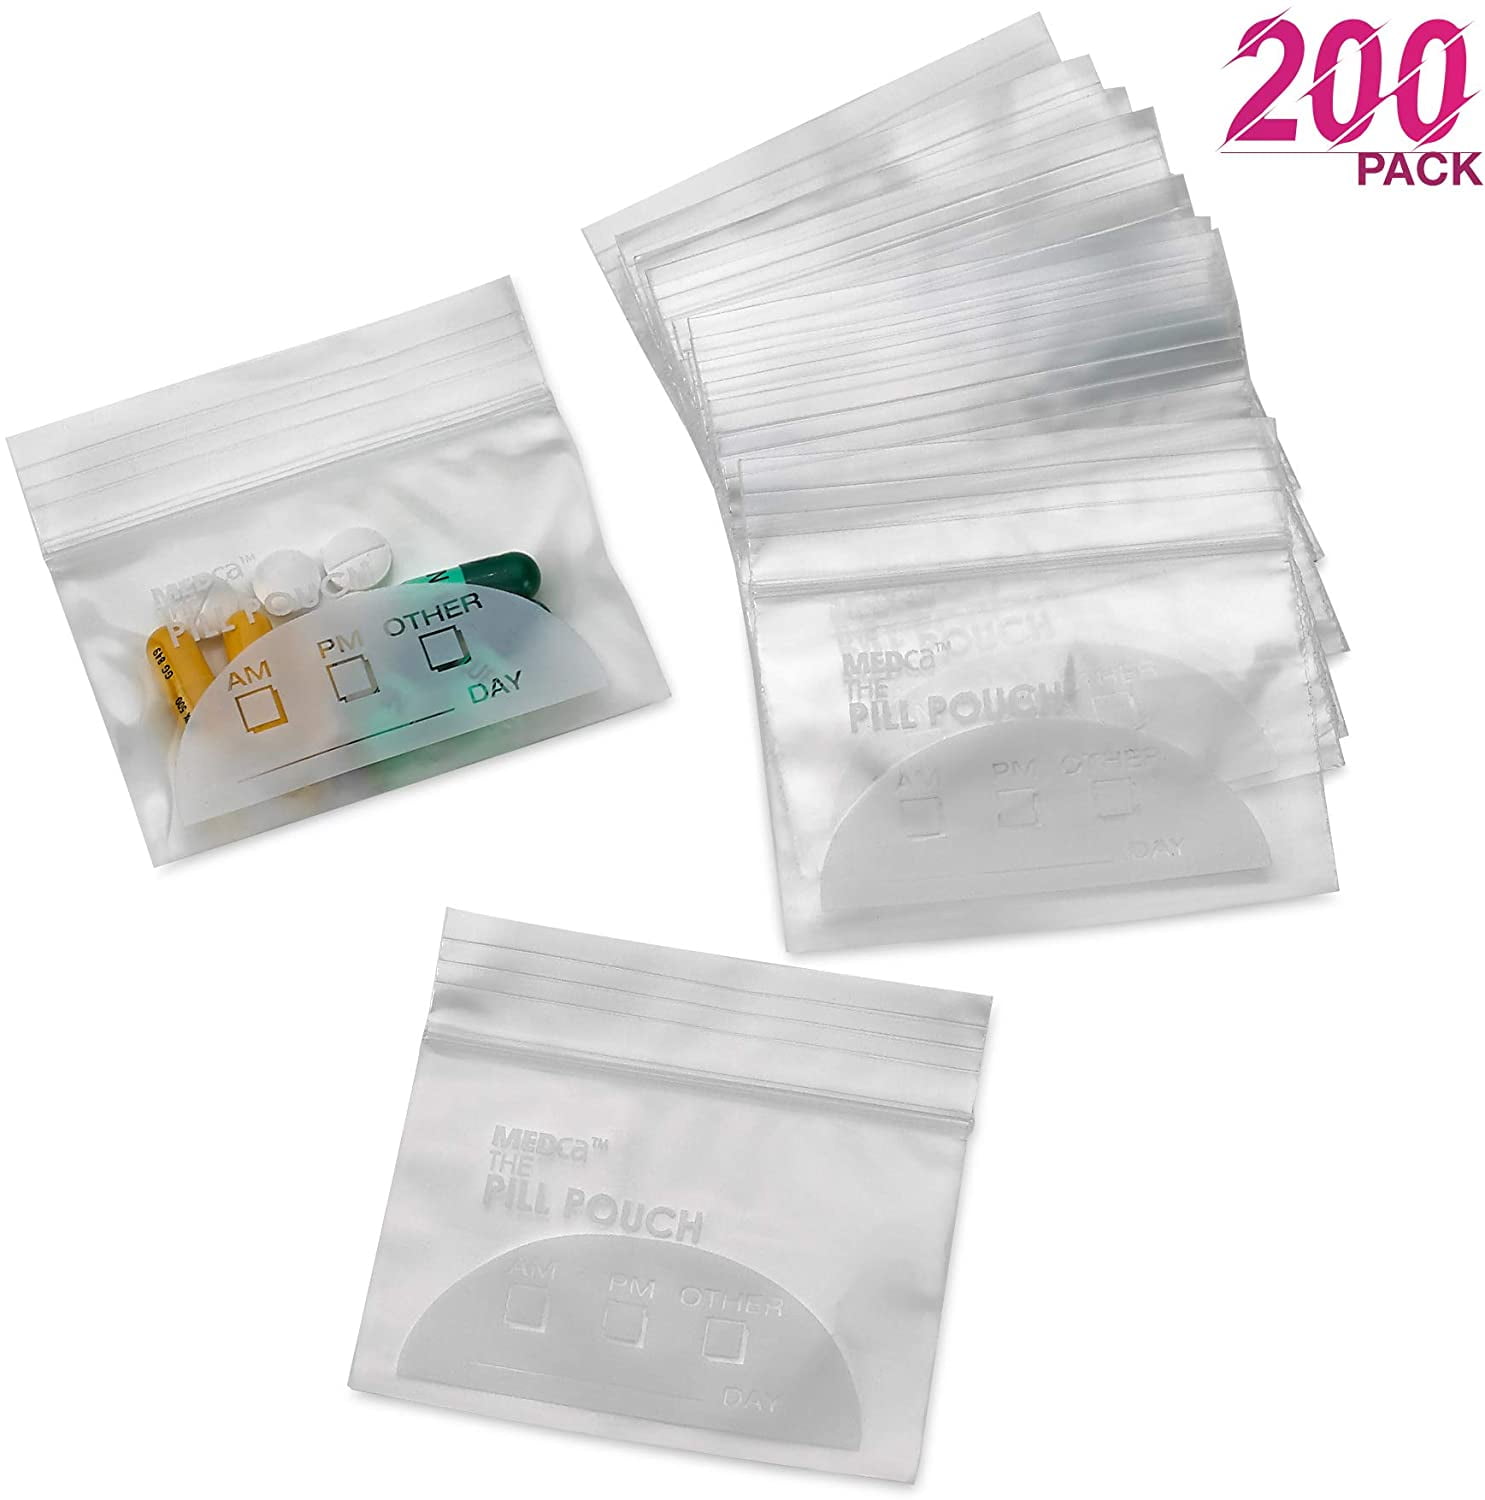 Pill Pouches, Plastic Pill Bags (Pack of 200) – Resealable Zipper